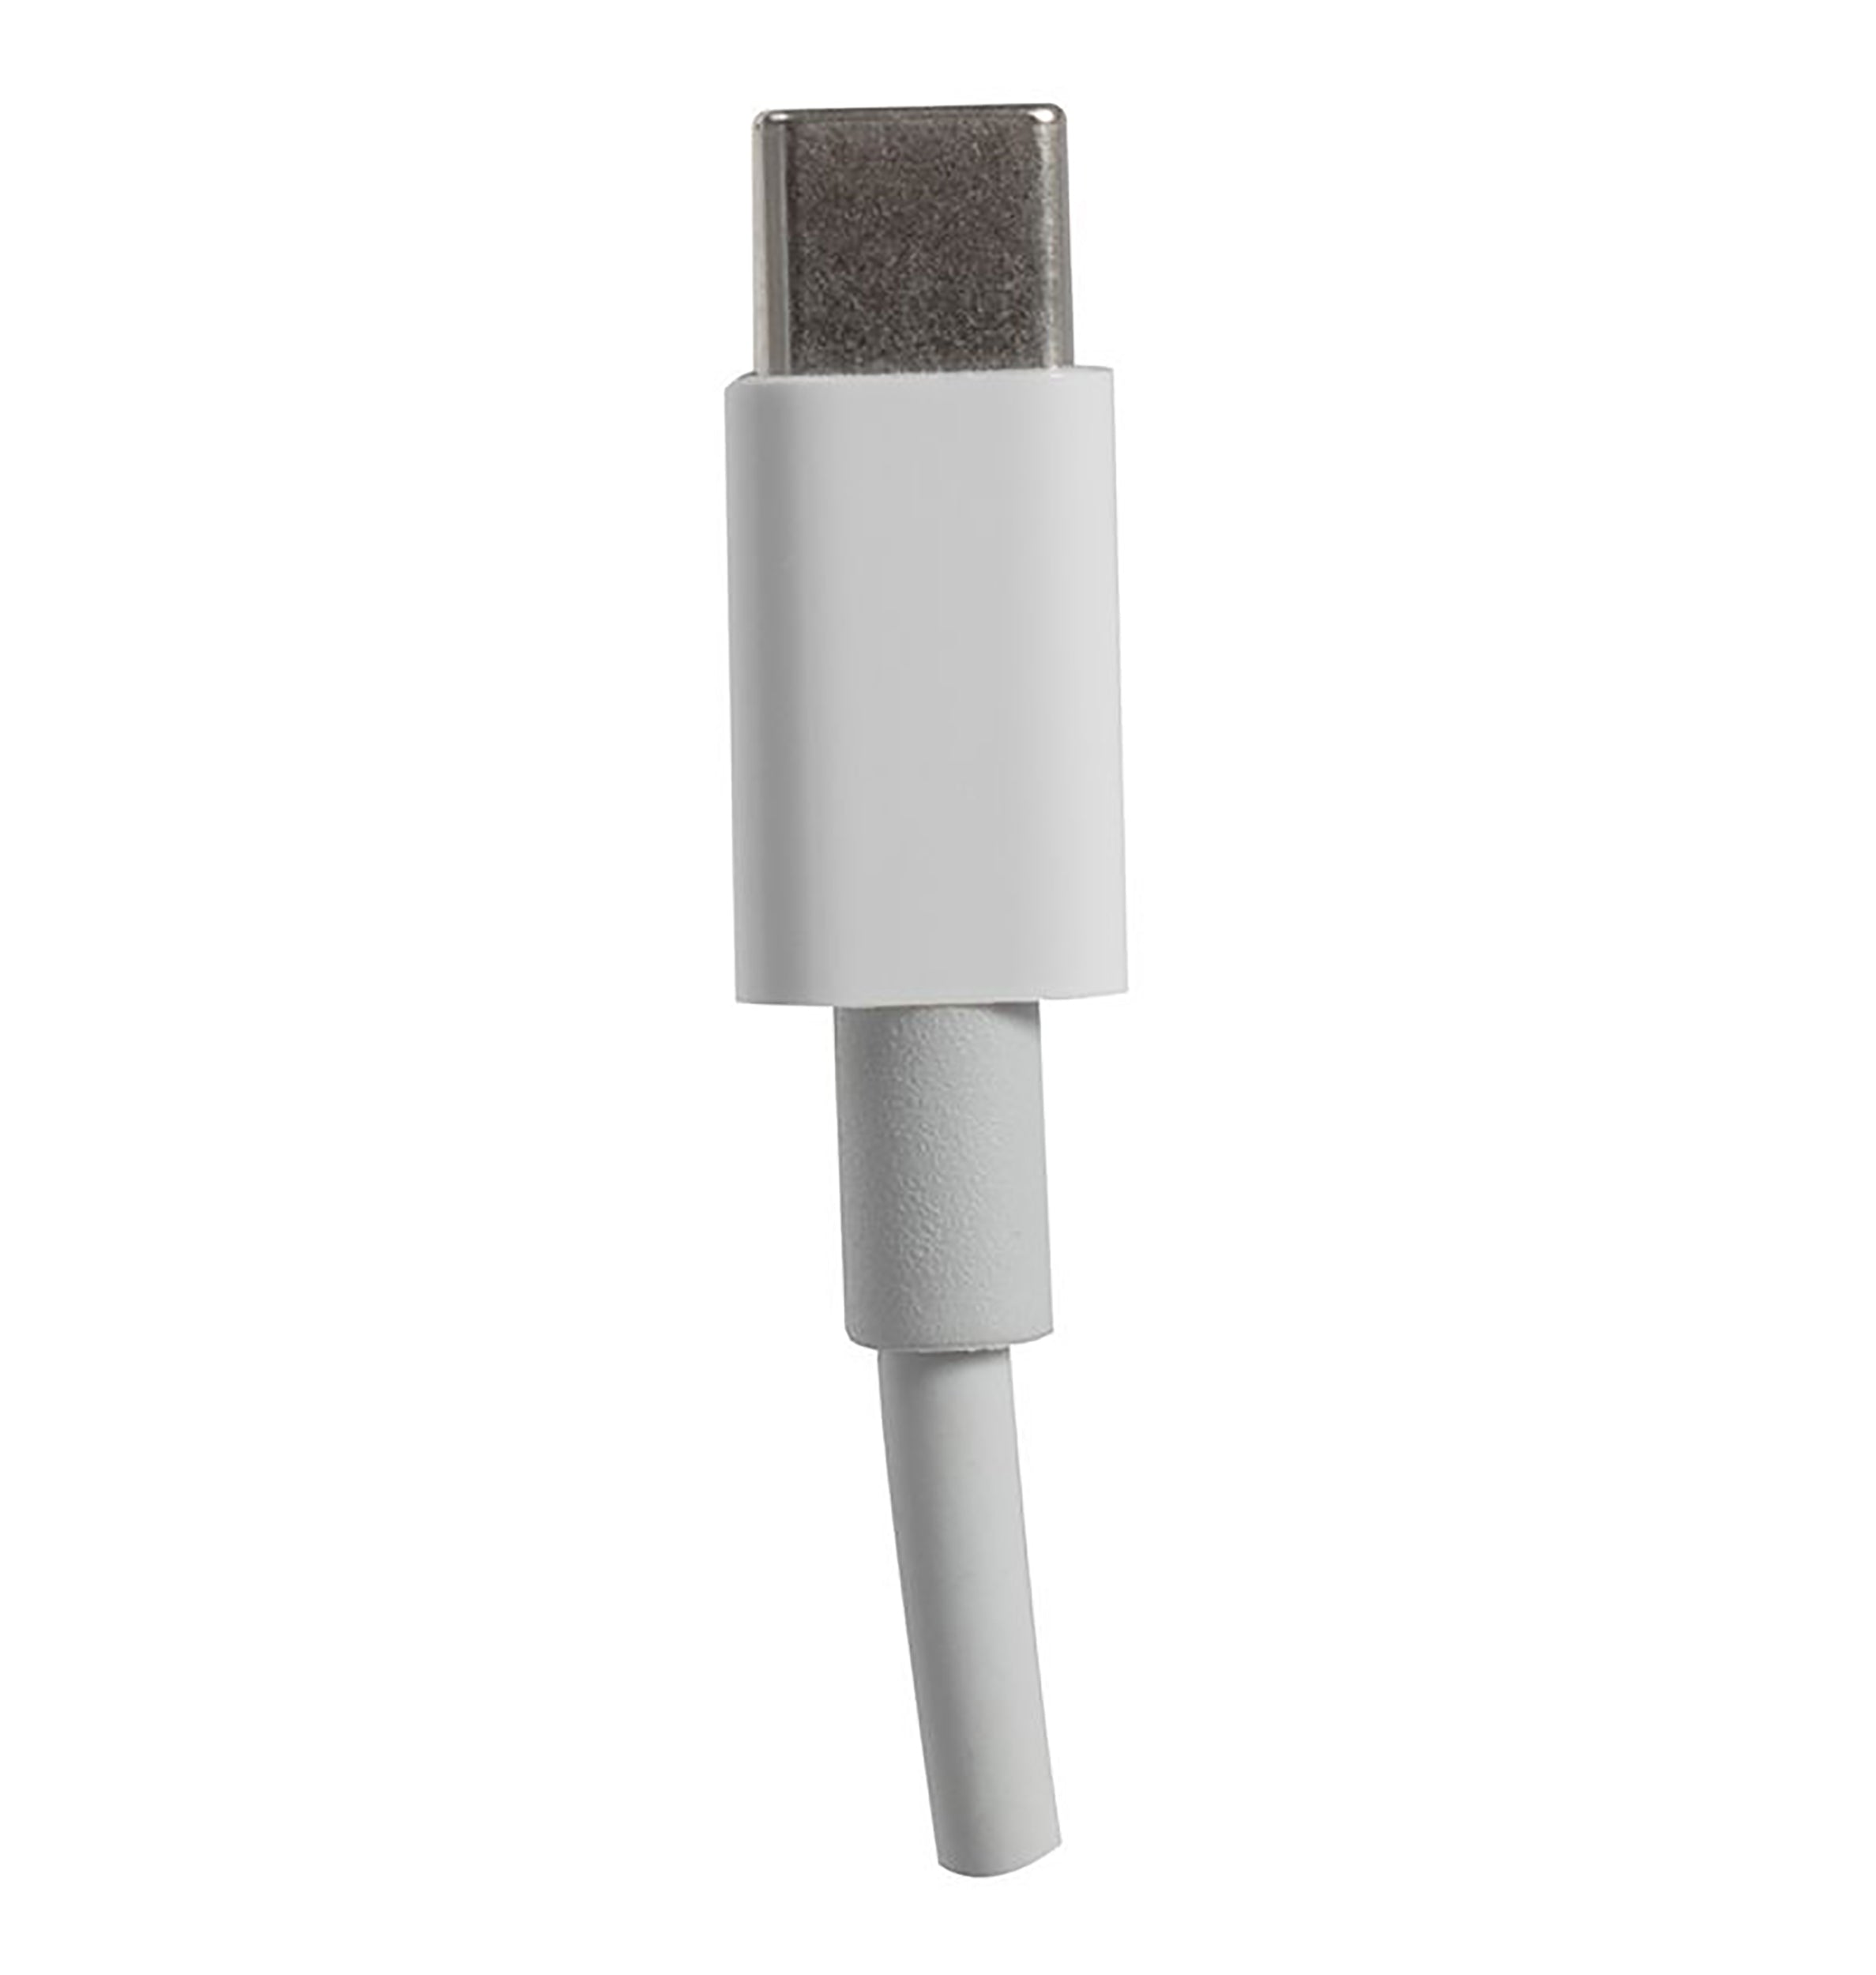 ADJ USB C Adapter, USB C to USB A Adapter with USB C Charging Port by ADJ